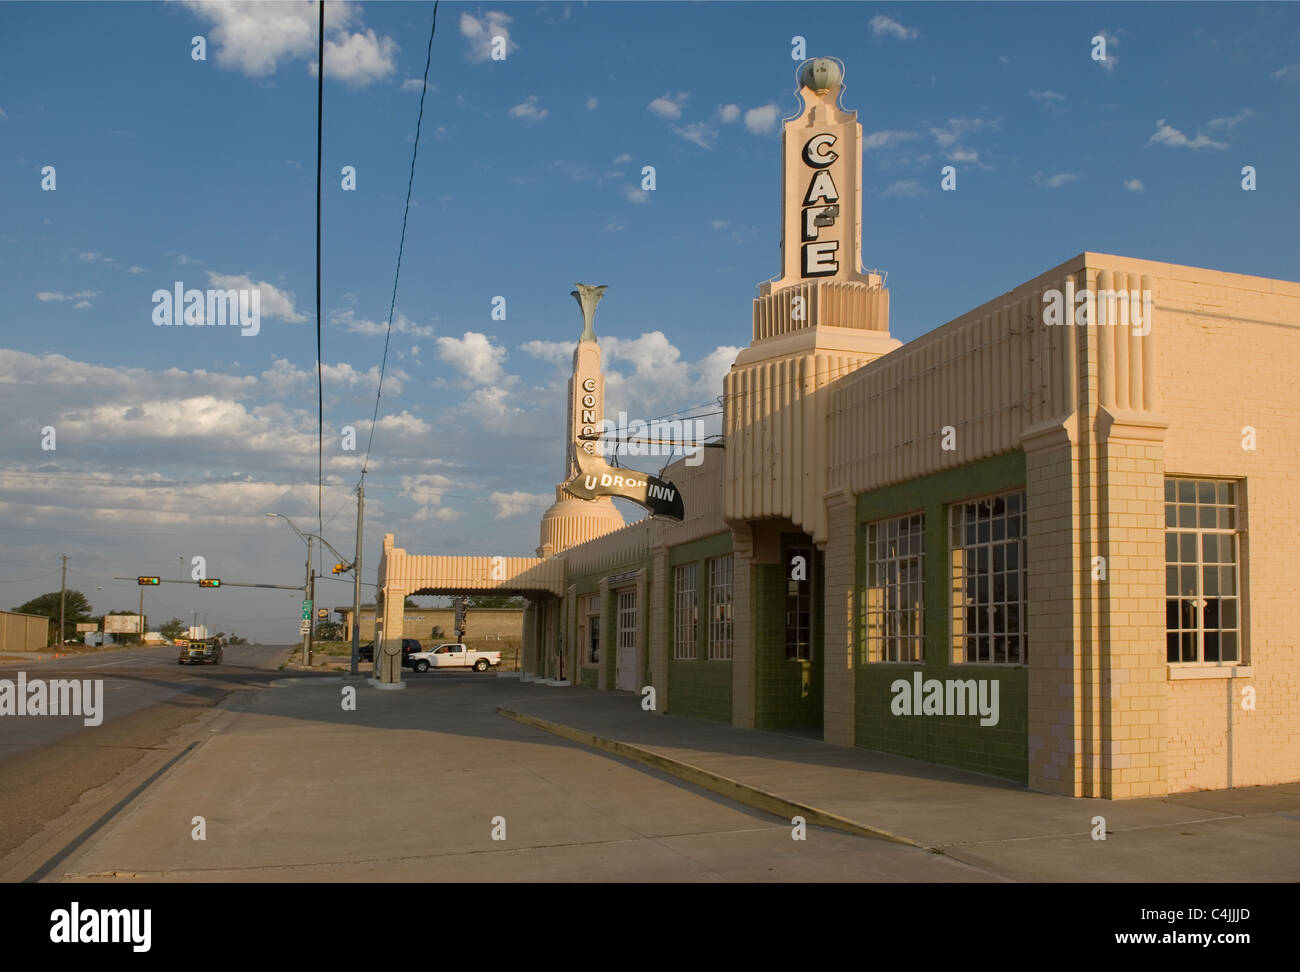 U-Drop Inn Cafe Shamrock Texas USA Stock Photo